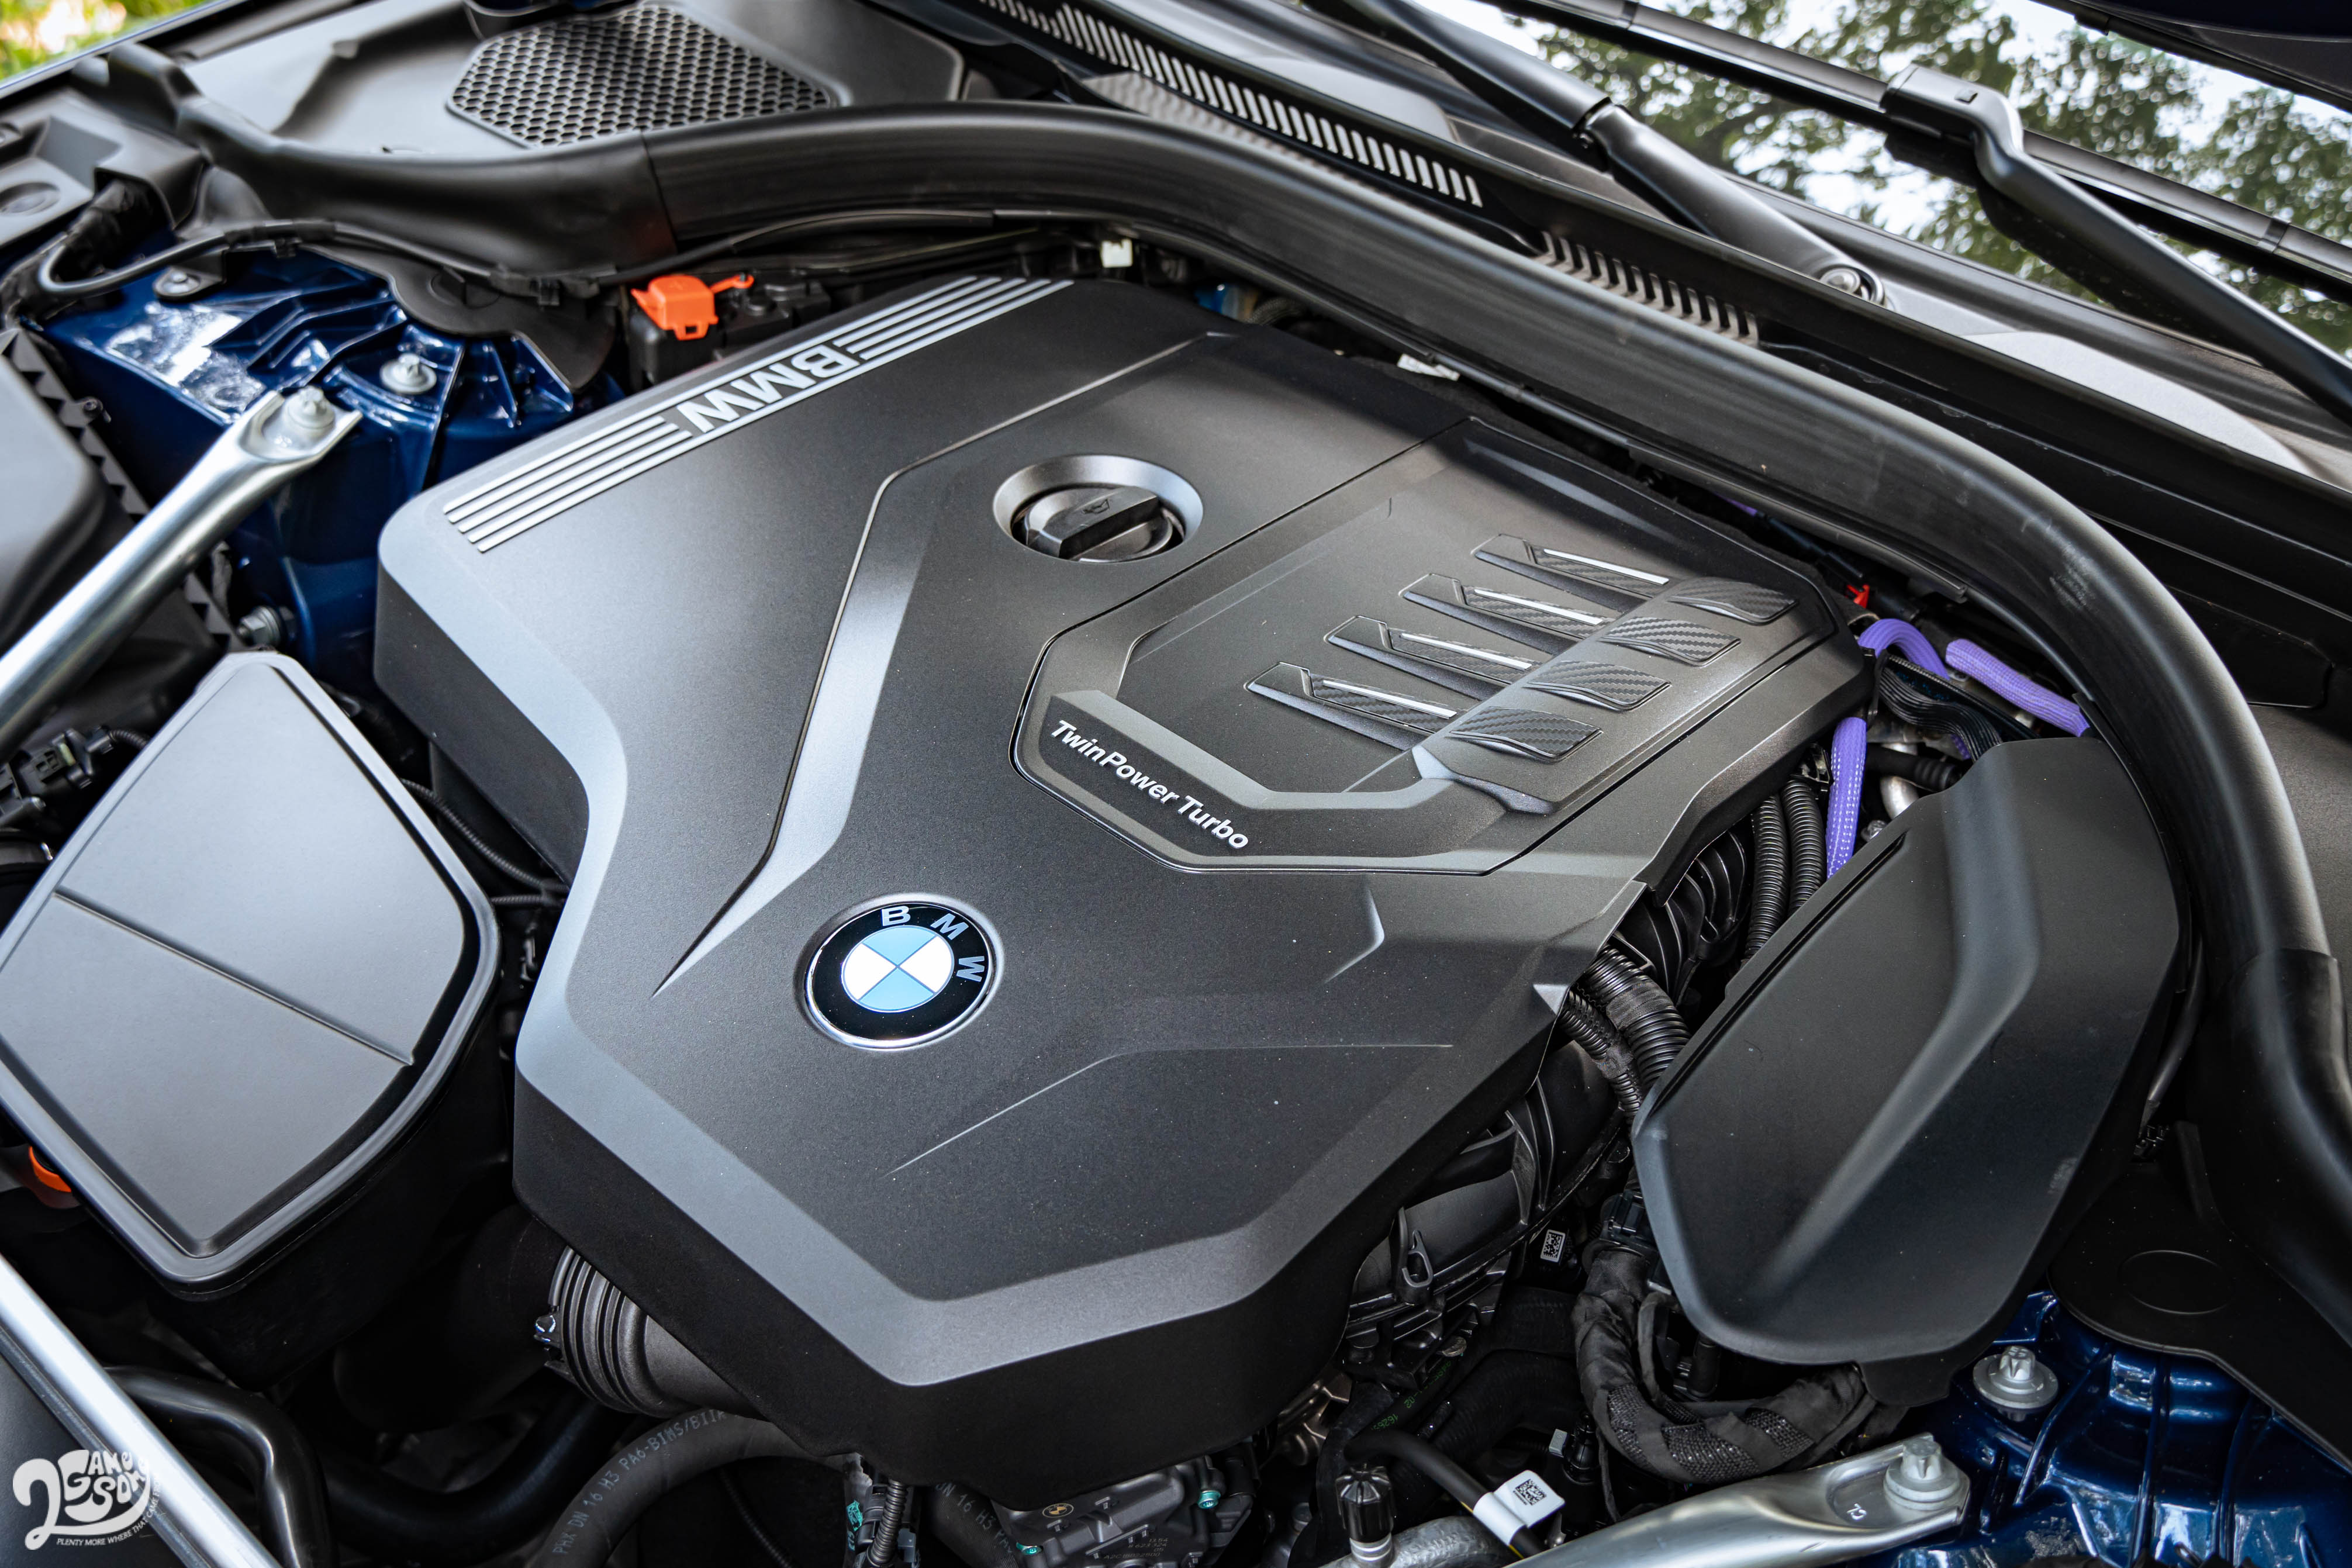 TwinPower Turbo 直列四缸引擎有 252 hp/350 Nm 的出力，48V 輕油電系統在全油門加速時還可額外提供 11 匹馬力。